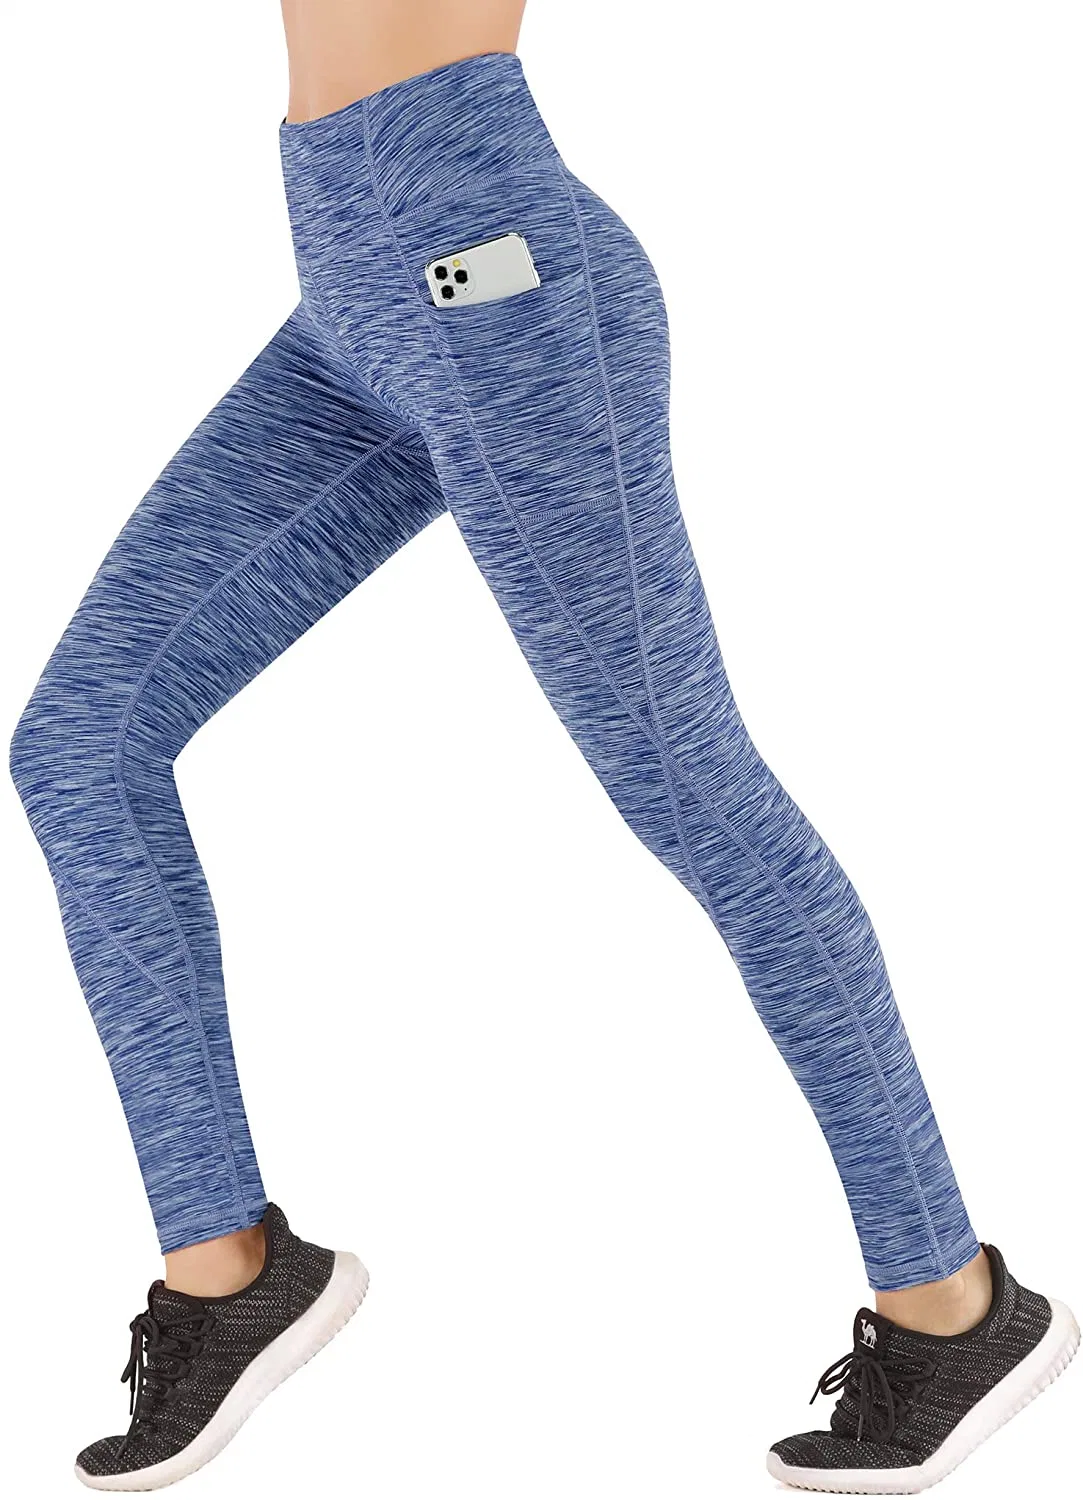 Colorful Clothing Legging Home Gym Fitness Sportswear Yoga Pants Wear